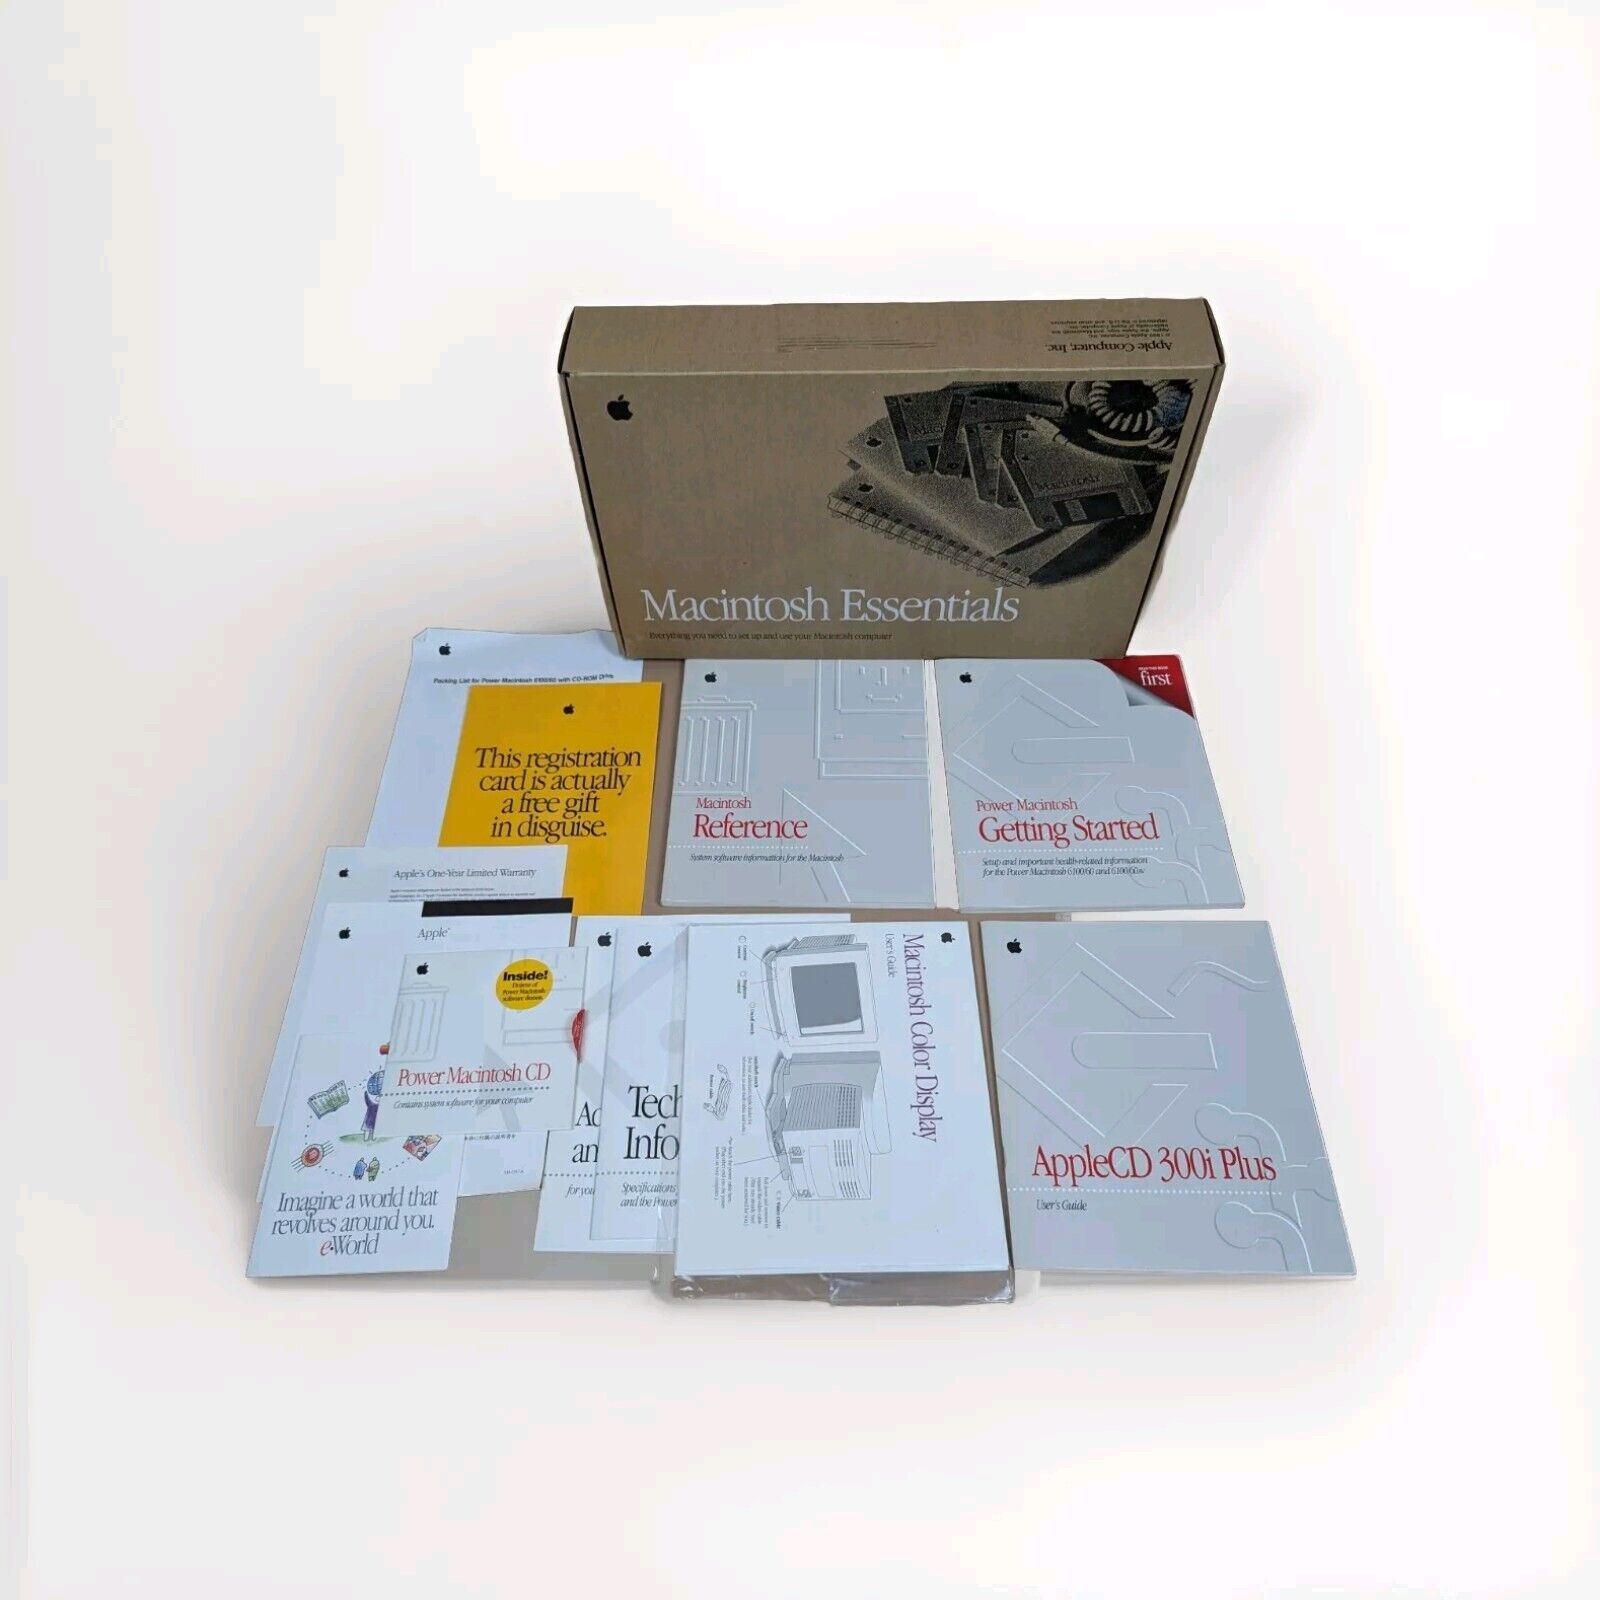 Apple Power Macintosh Essential for 6100/60 60AV Series Software CD & Manuals